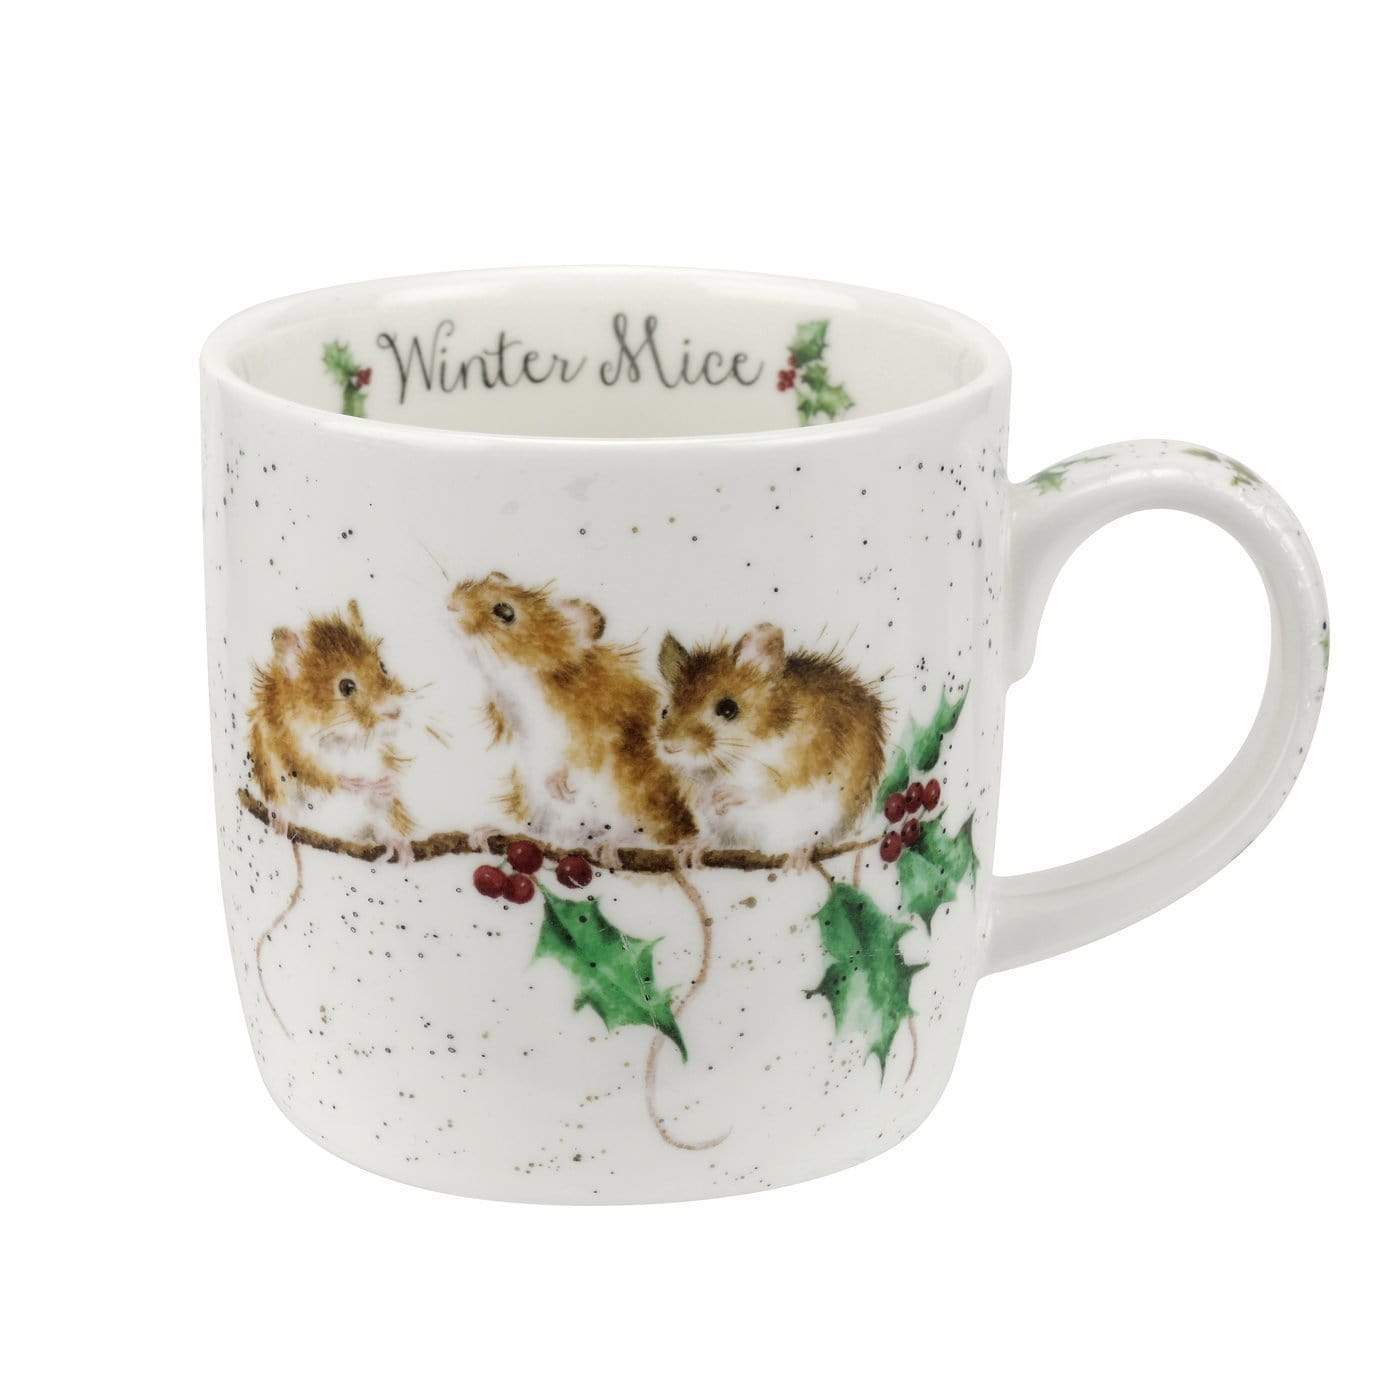 Wrendale Designs Mugs & Drinkware Winter Mice Country Animal Illustrated Mugs - Choice of designs